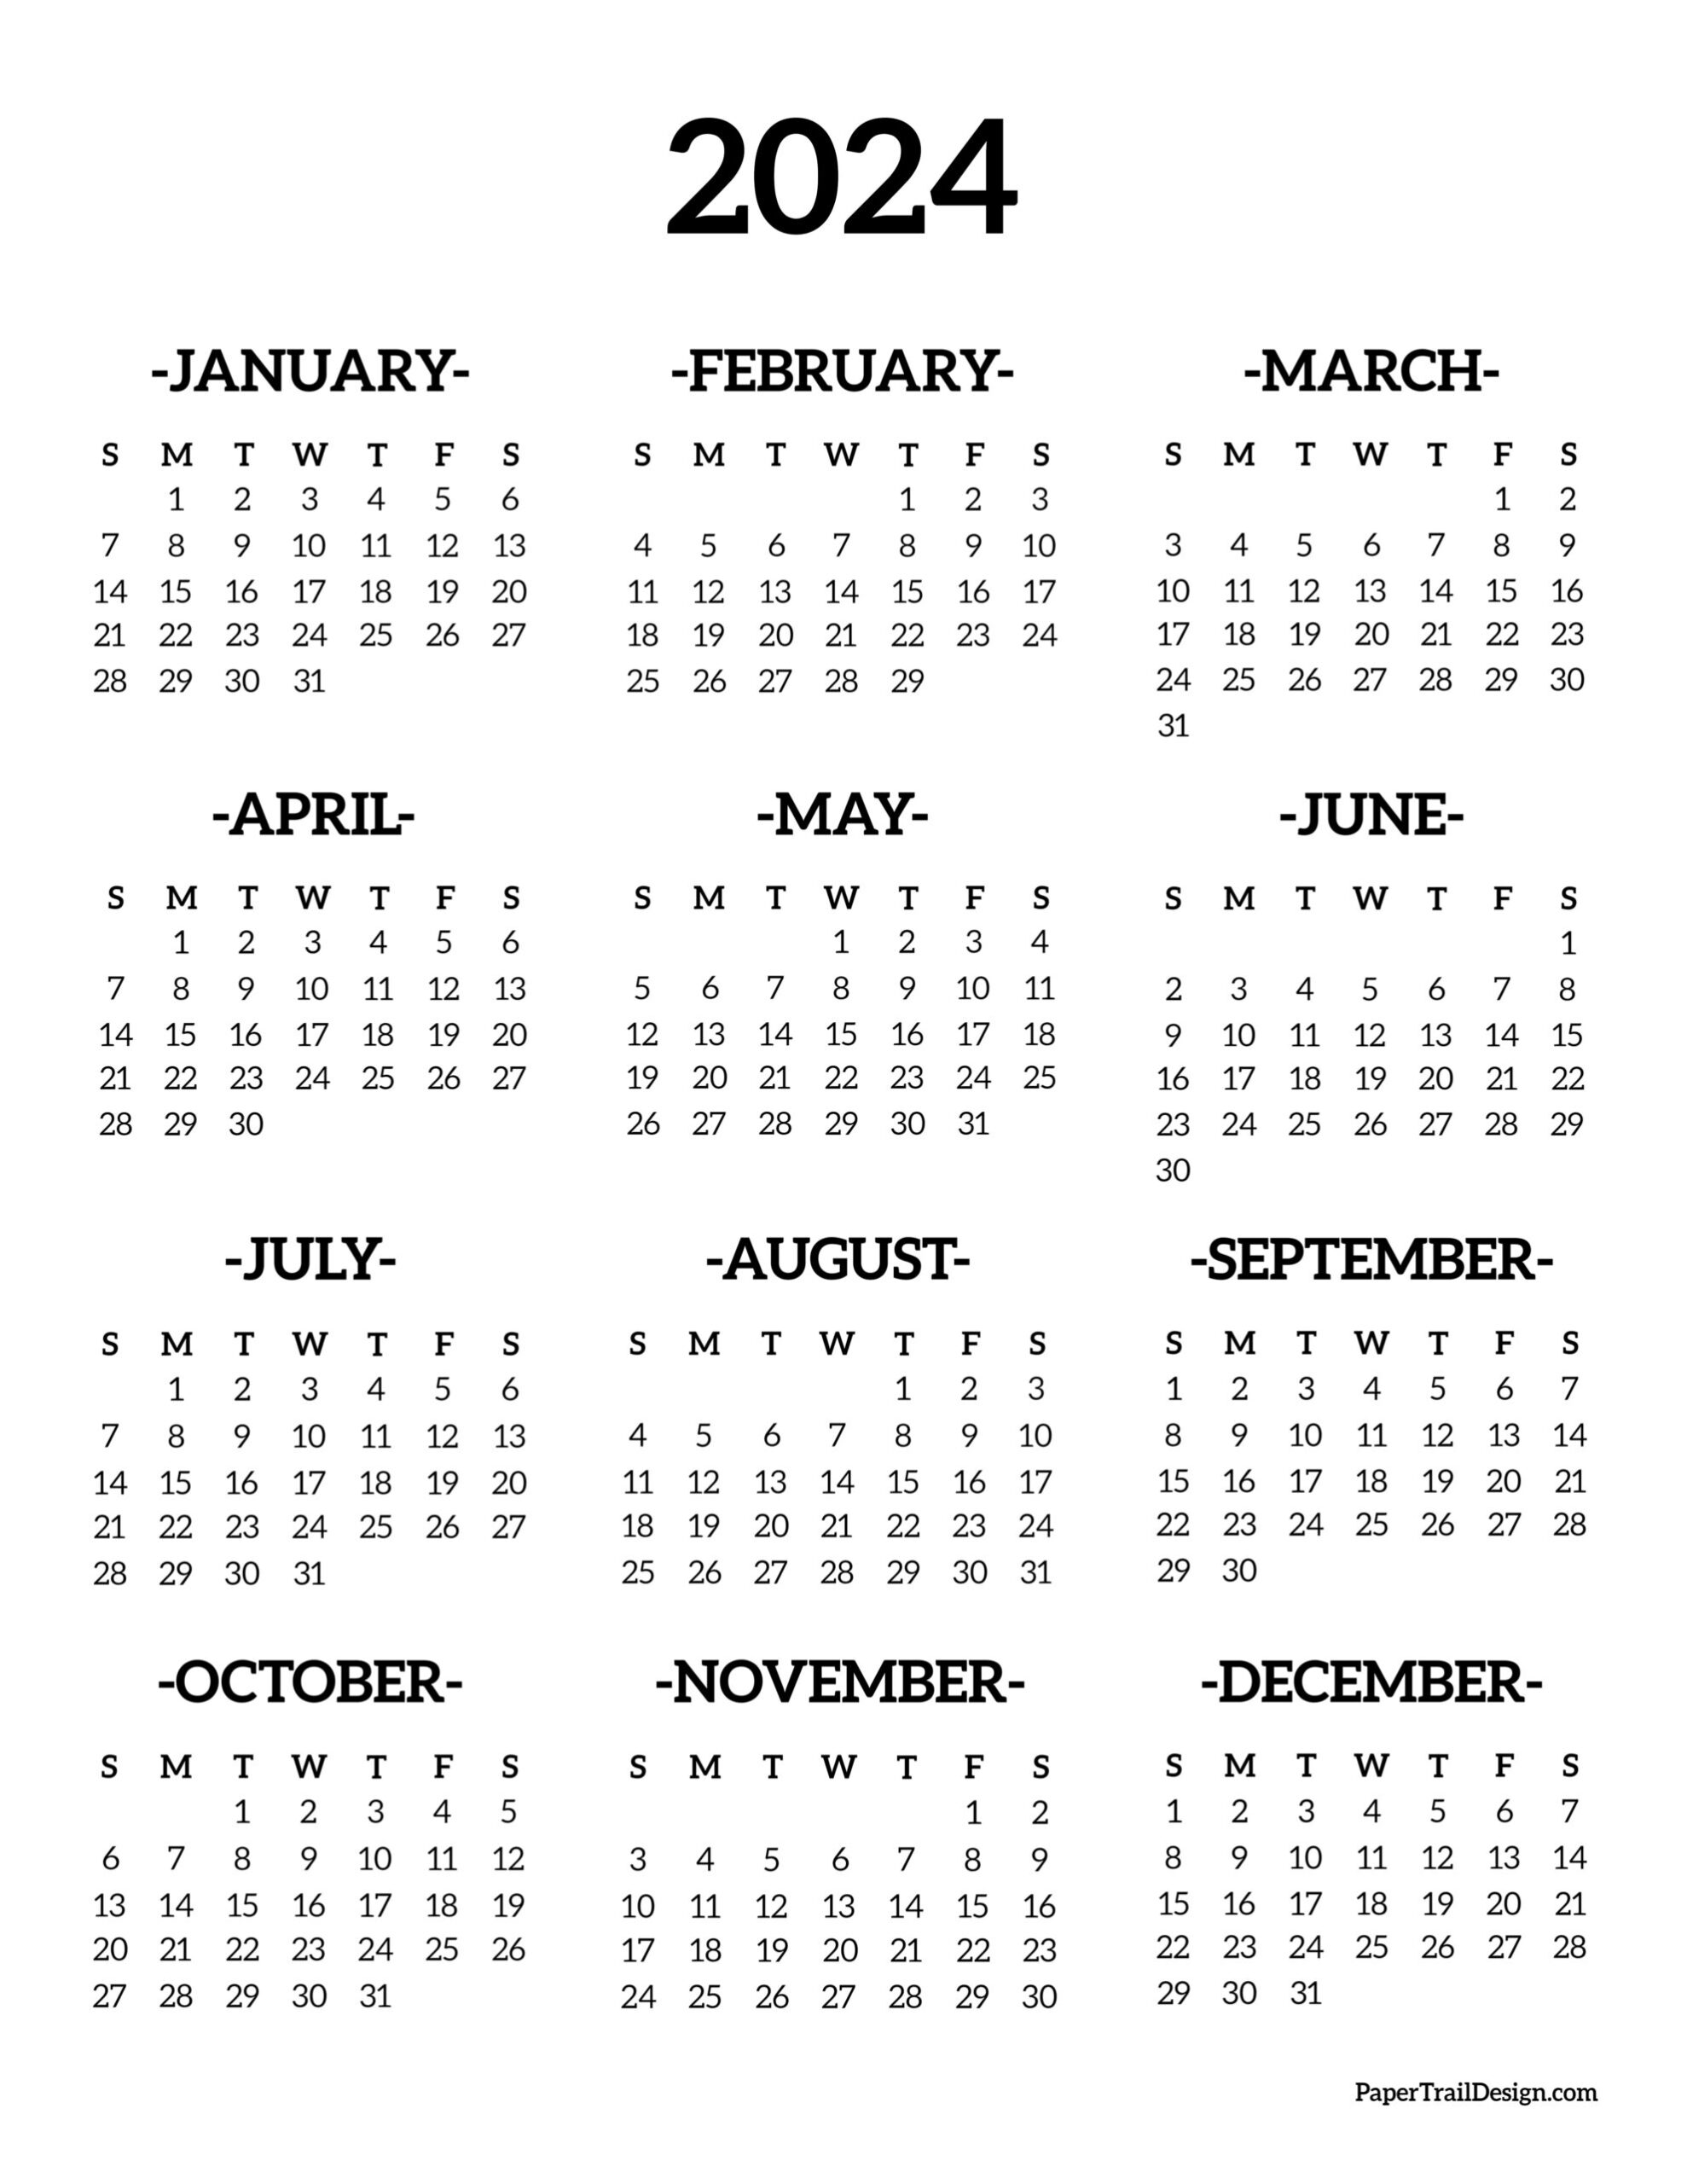 Calendar 2024 Printable One Page - Paper Trail Design for 2024 Calendar 2024 Printable